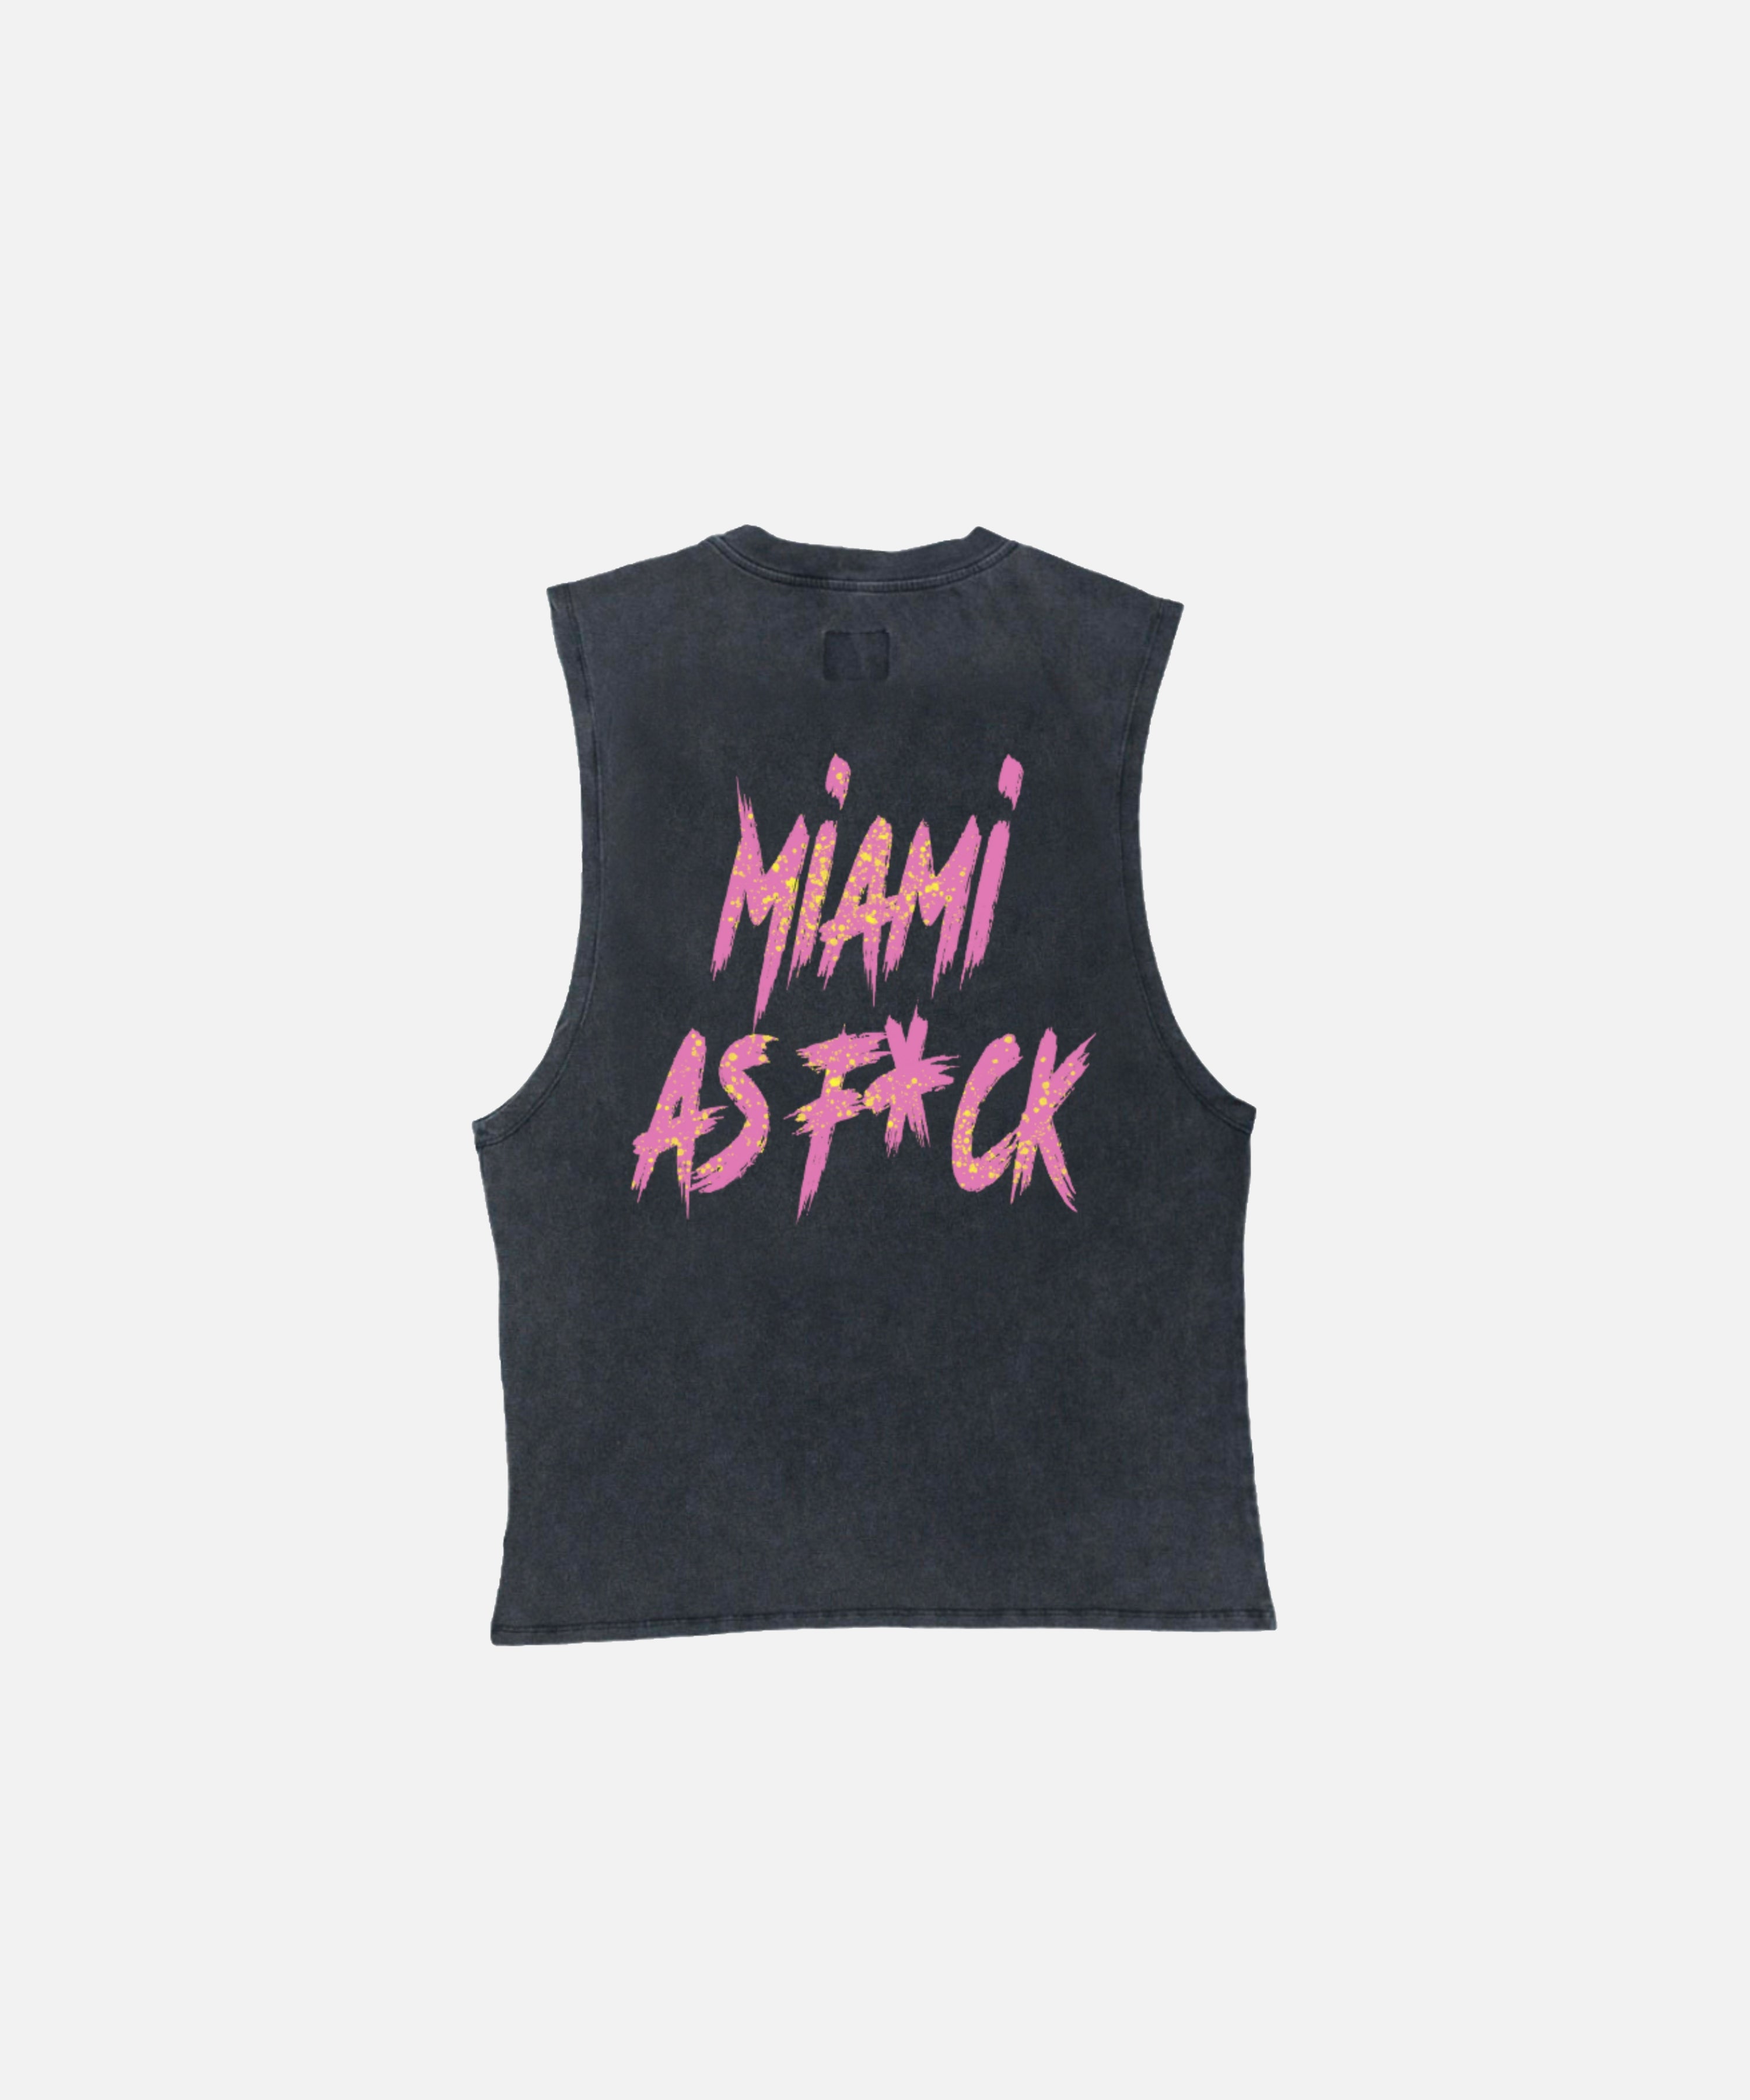 Miami comme F*ck T-Shirt